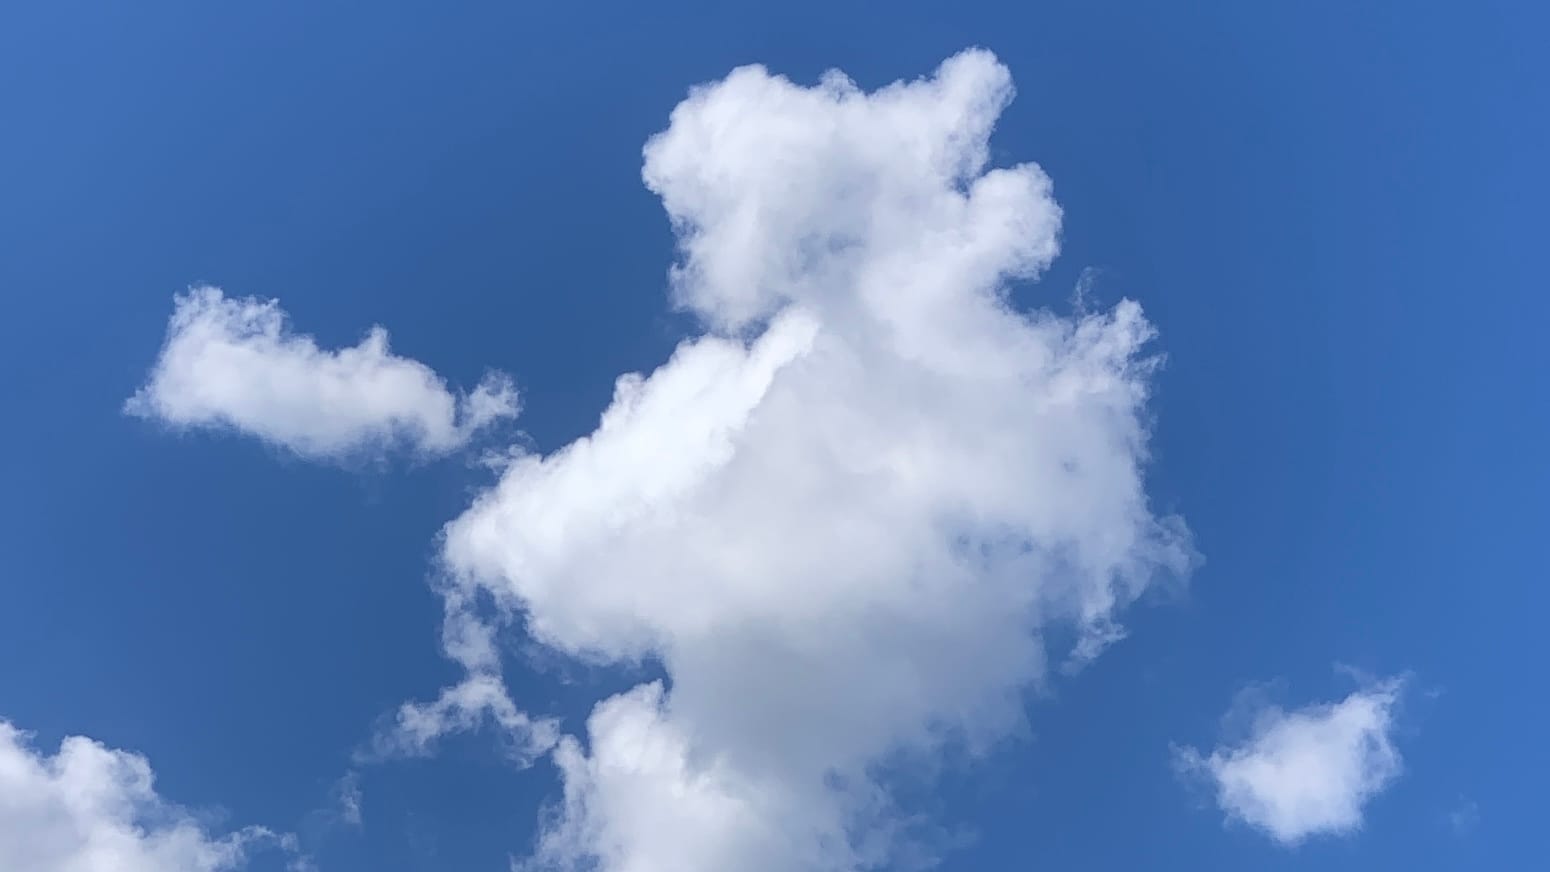 A tall poofy cloud against a blue sky